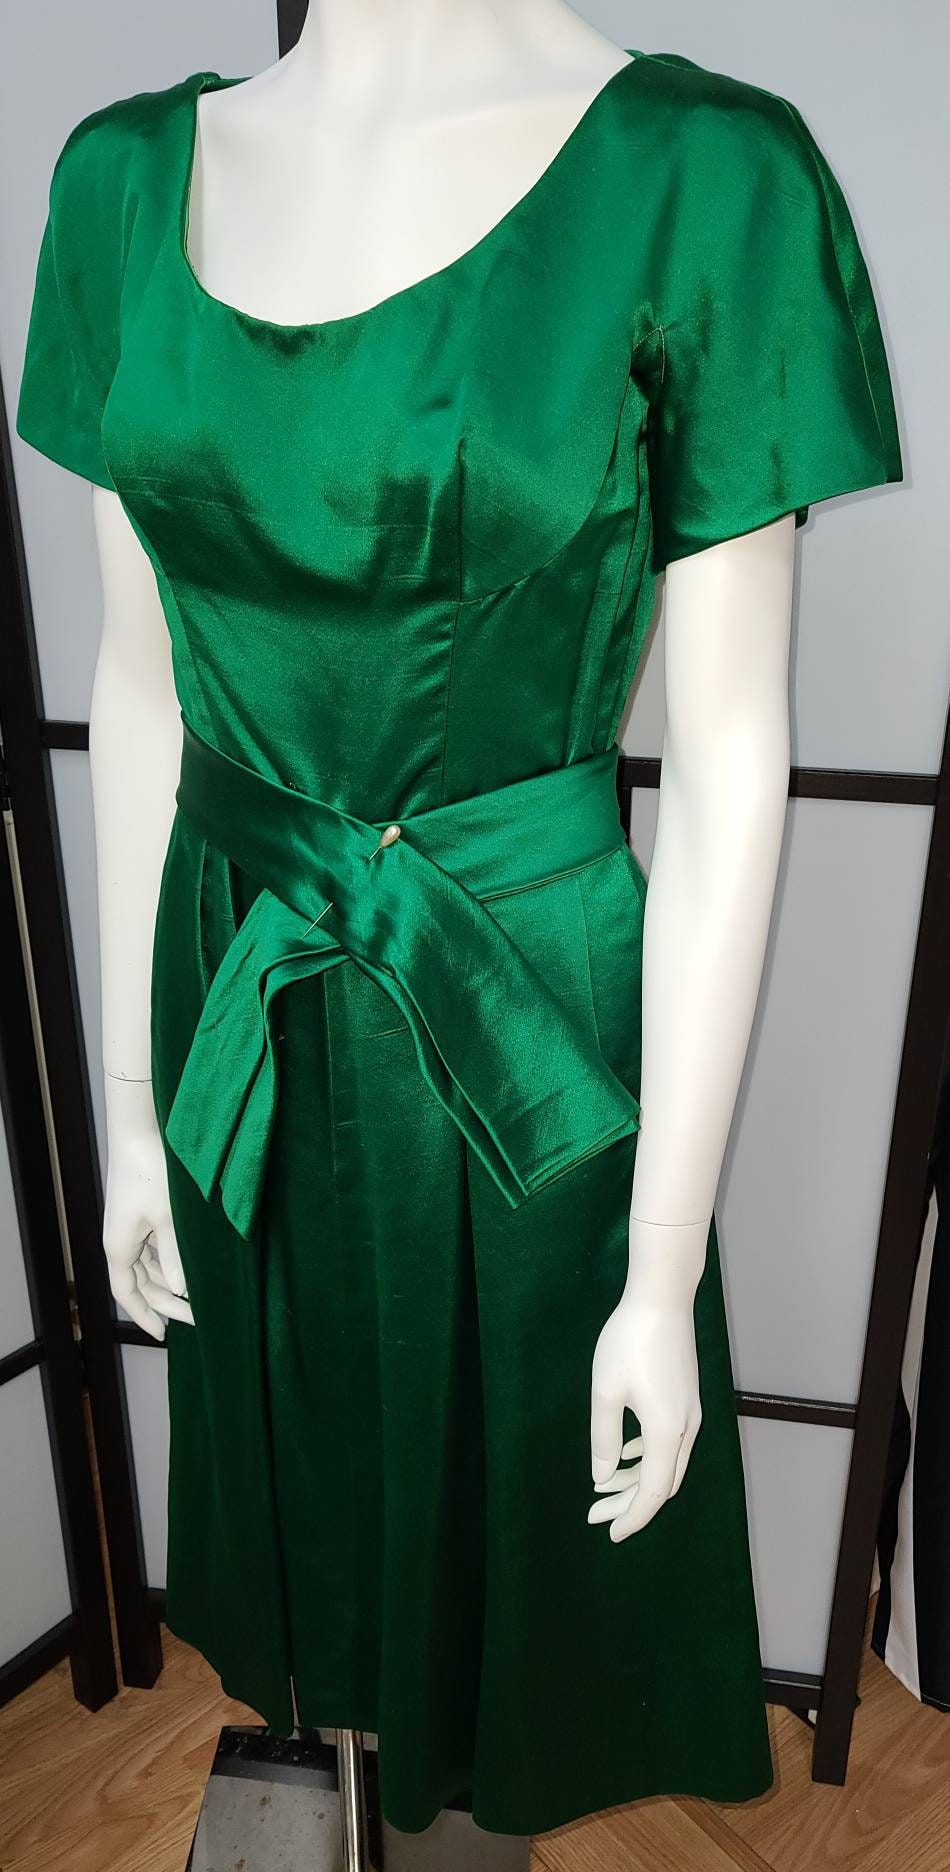 Vintage Satin Dress 1950s 60s Bright Green Satin Dress Net Underskirt Mid Century Rockabilly Dance Dress M